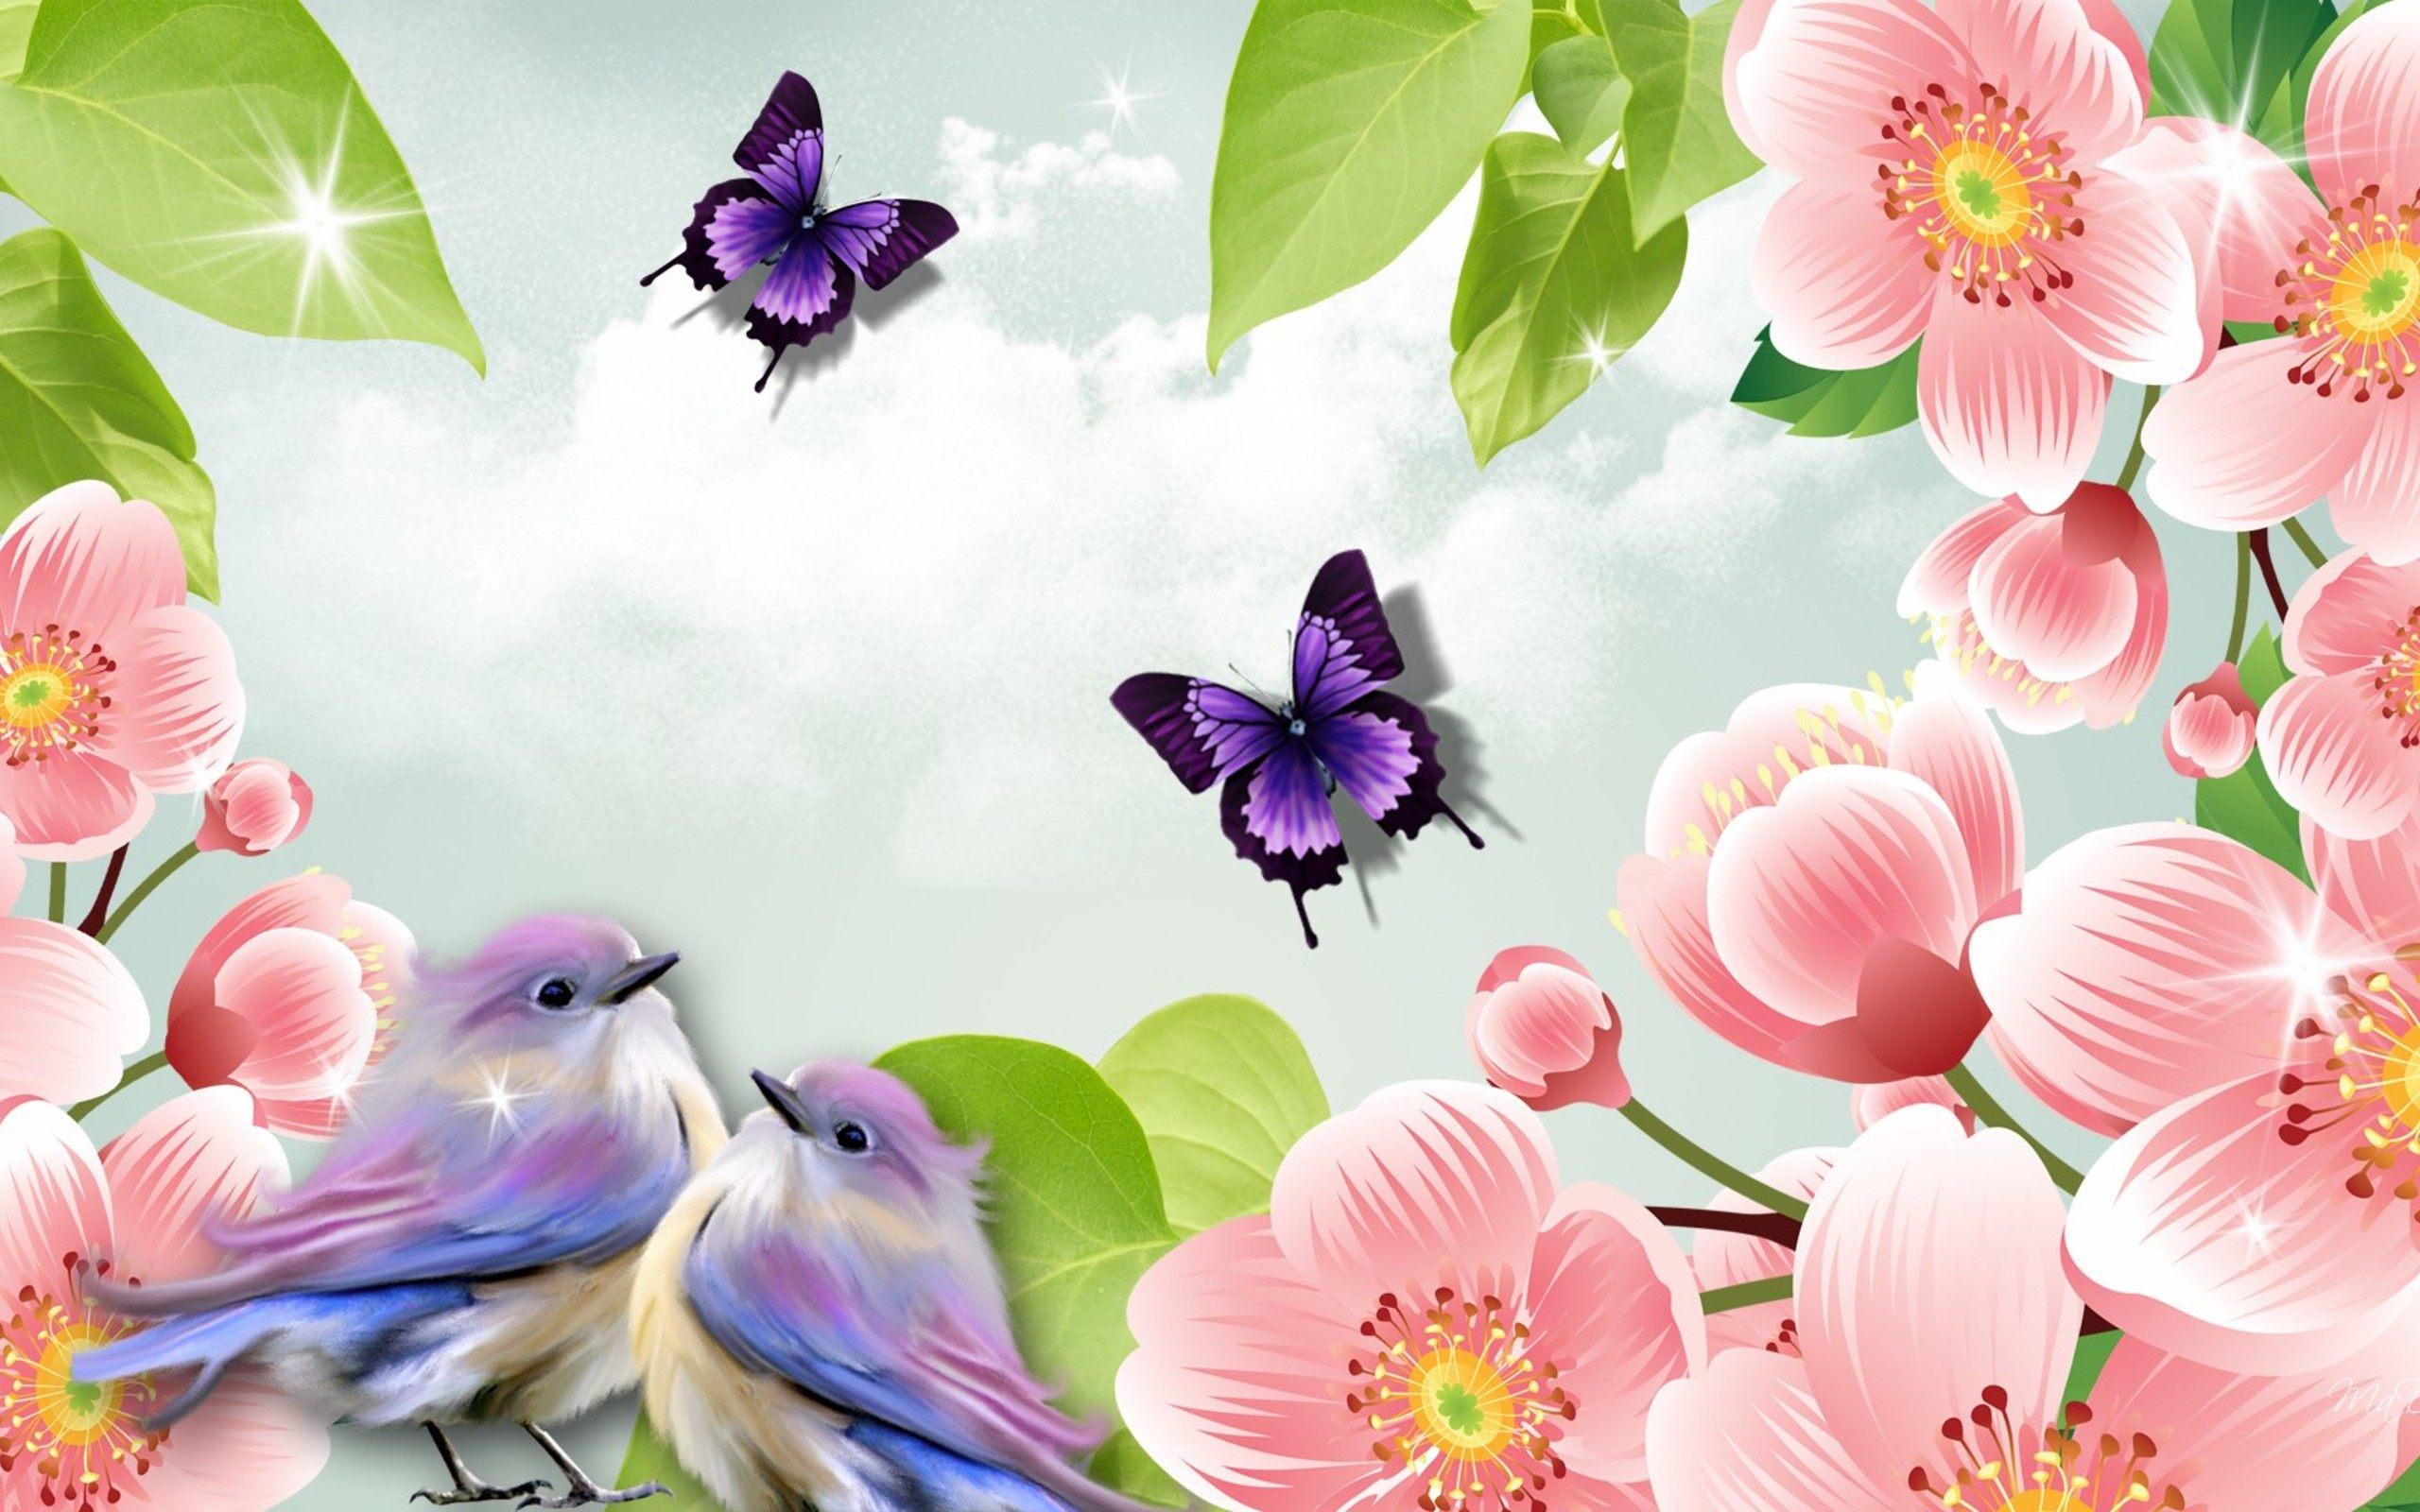 Birds And Butterflies Wallpaper Collection 2560x1600 (425.98 KB)